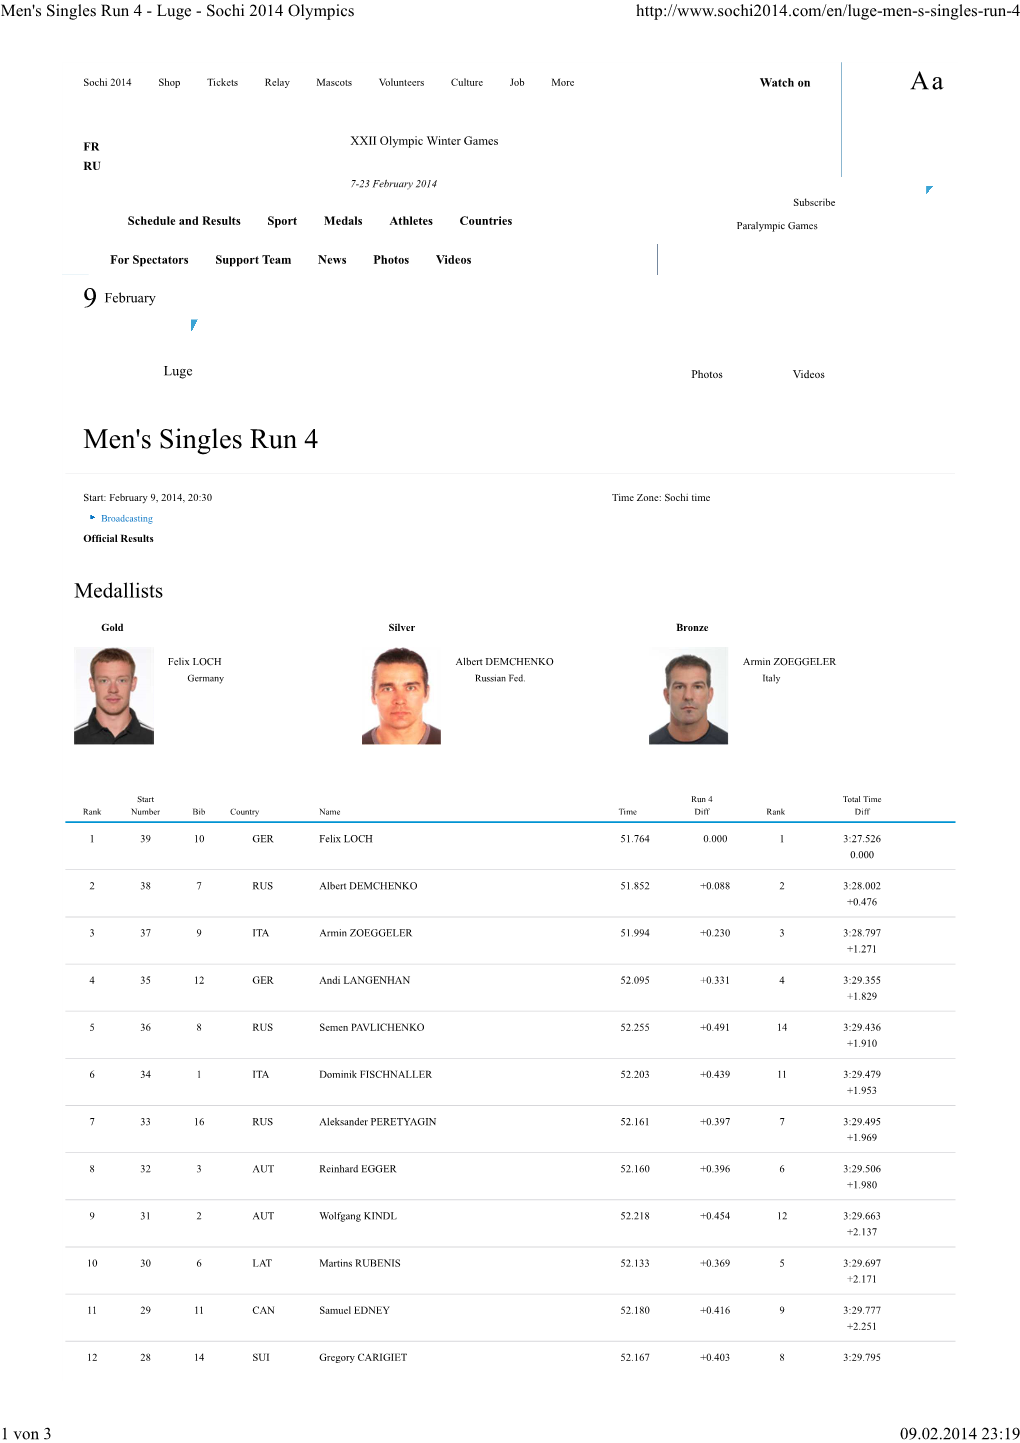 Men's Singles Run 4 - Luge - Sochi 2014 Olympics